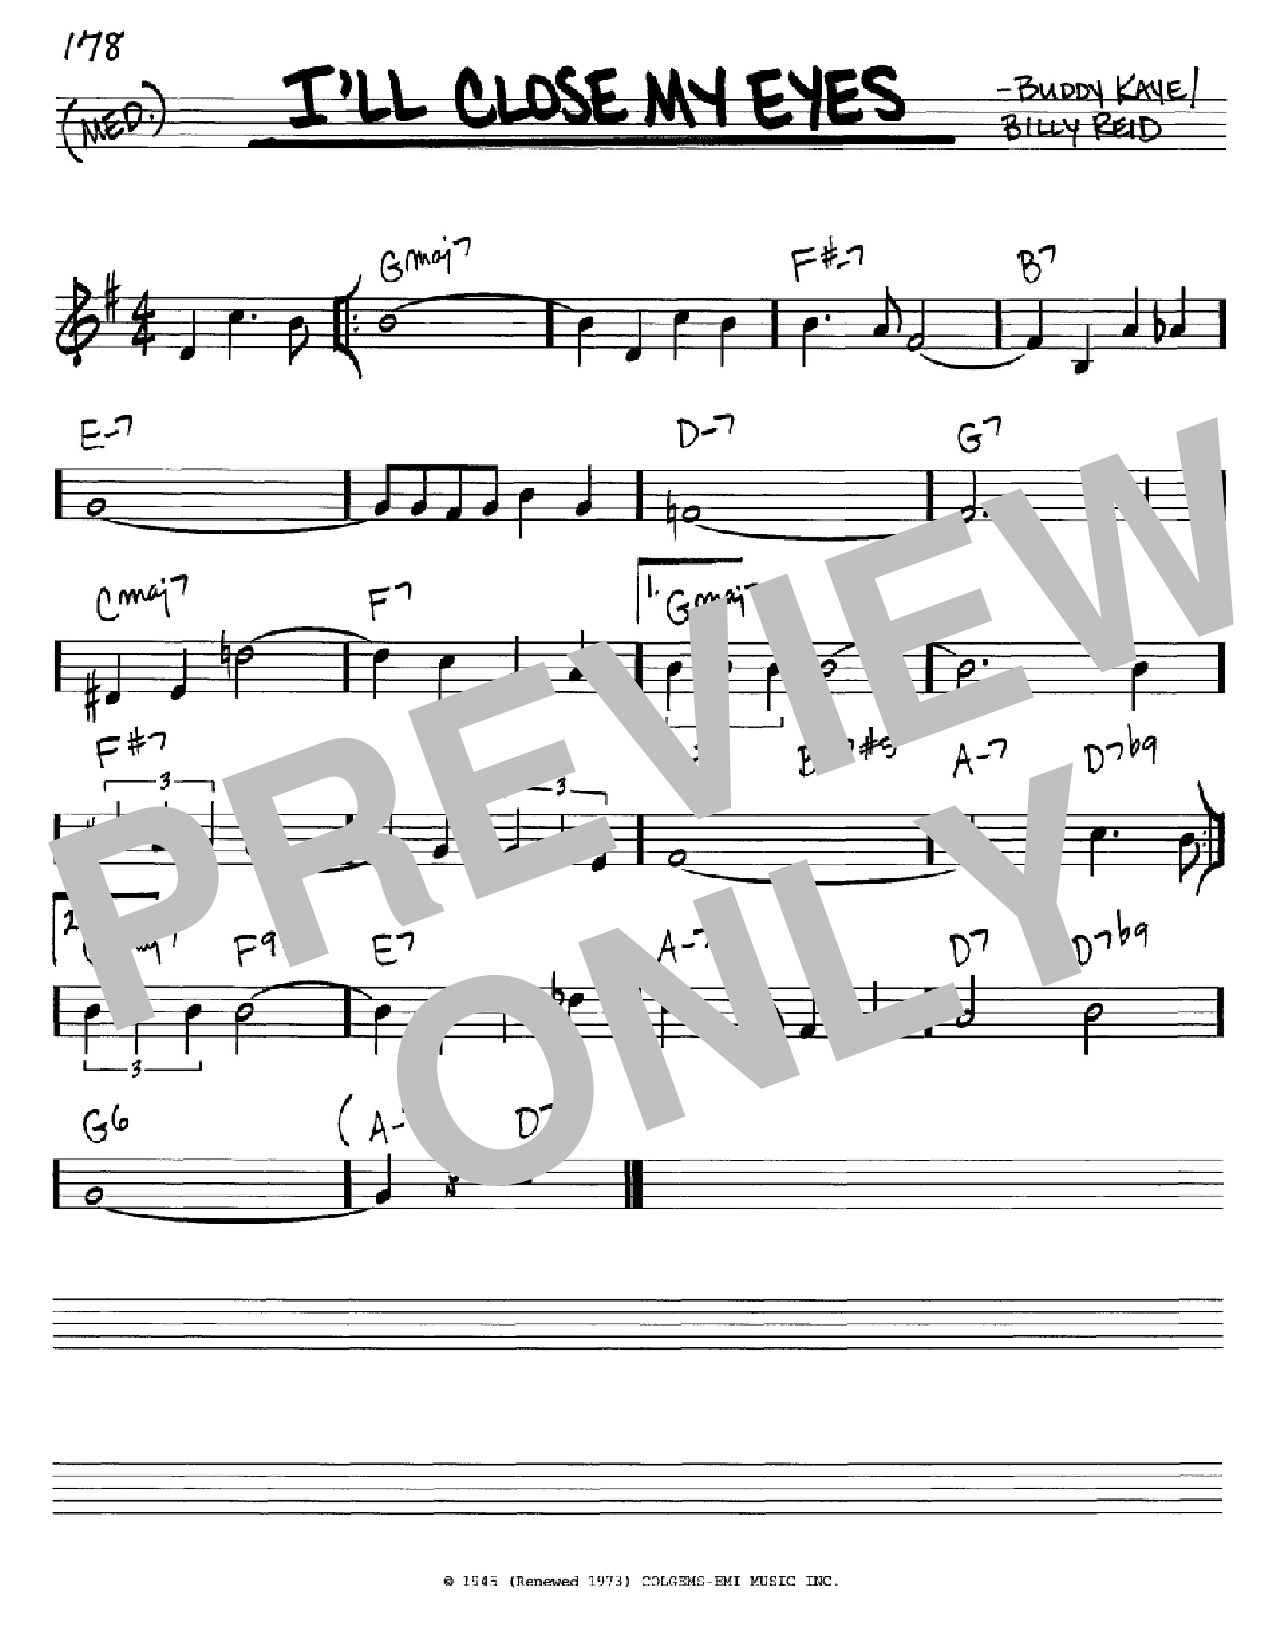 Buddy Kaye I'll Close My Eyes Sheet Music Notes & Chords for Melody Line, Lyrics & Chords - Download or Print PDF